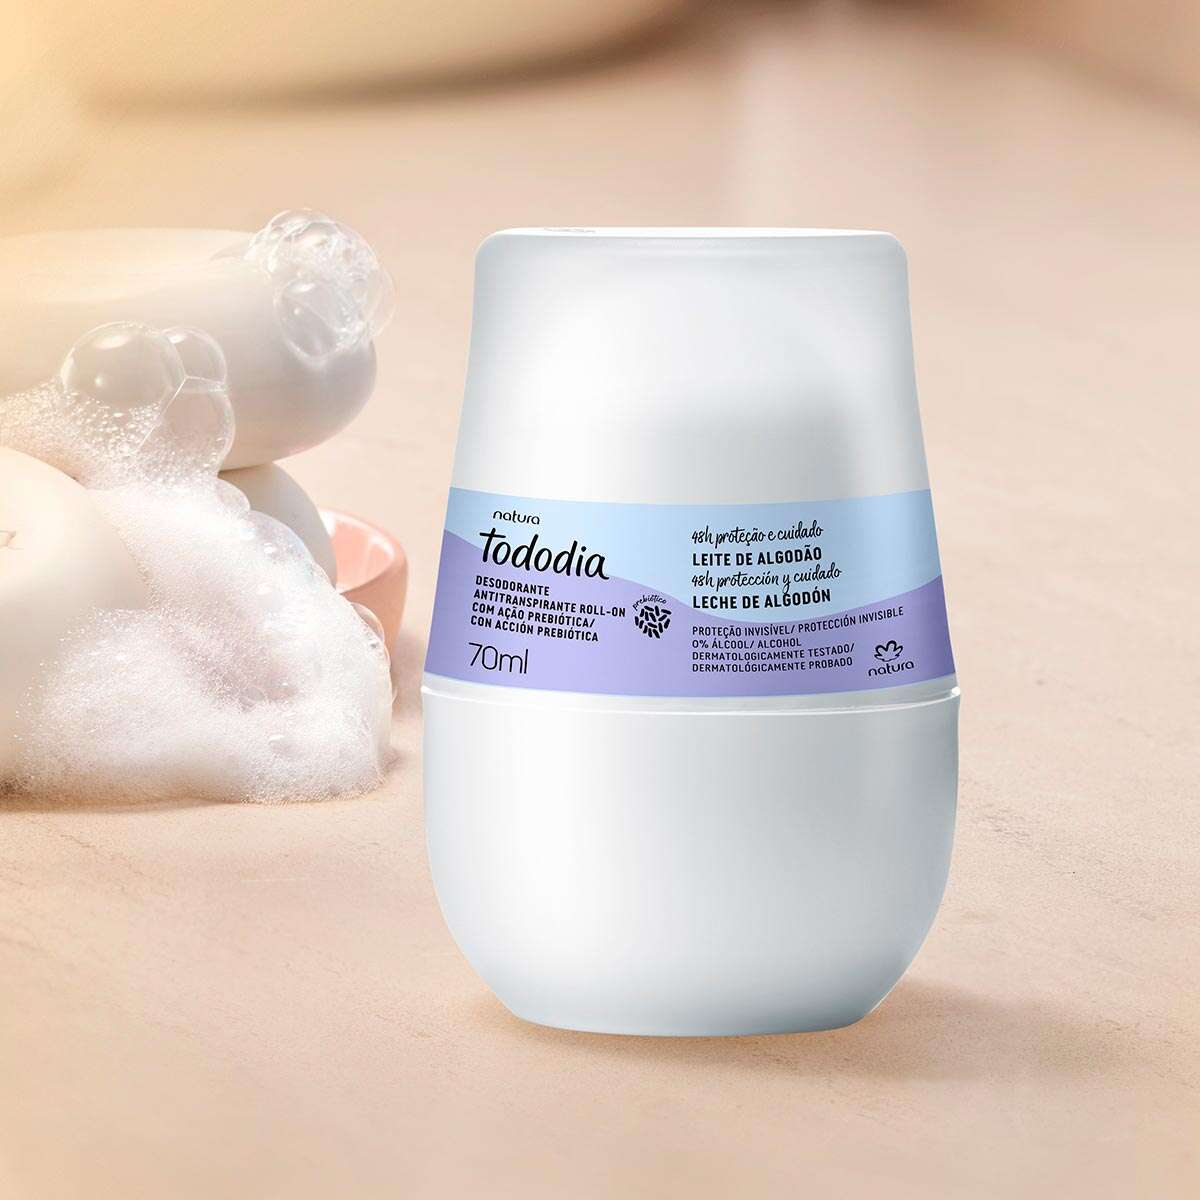 Tododia Roll-on Deodorant Cotton Milk 75ml